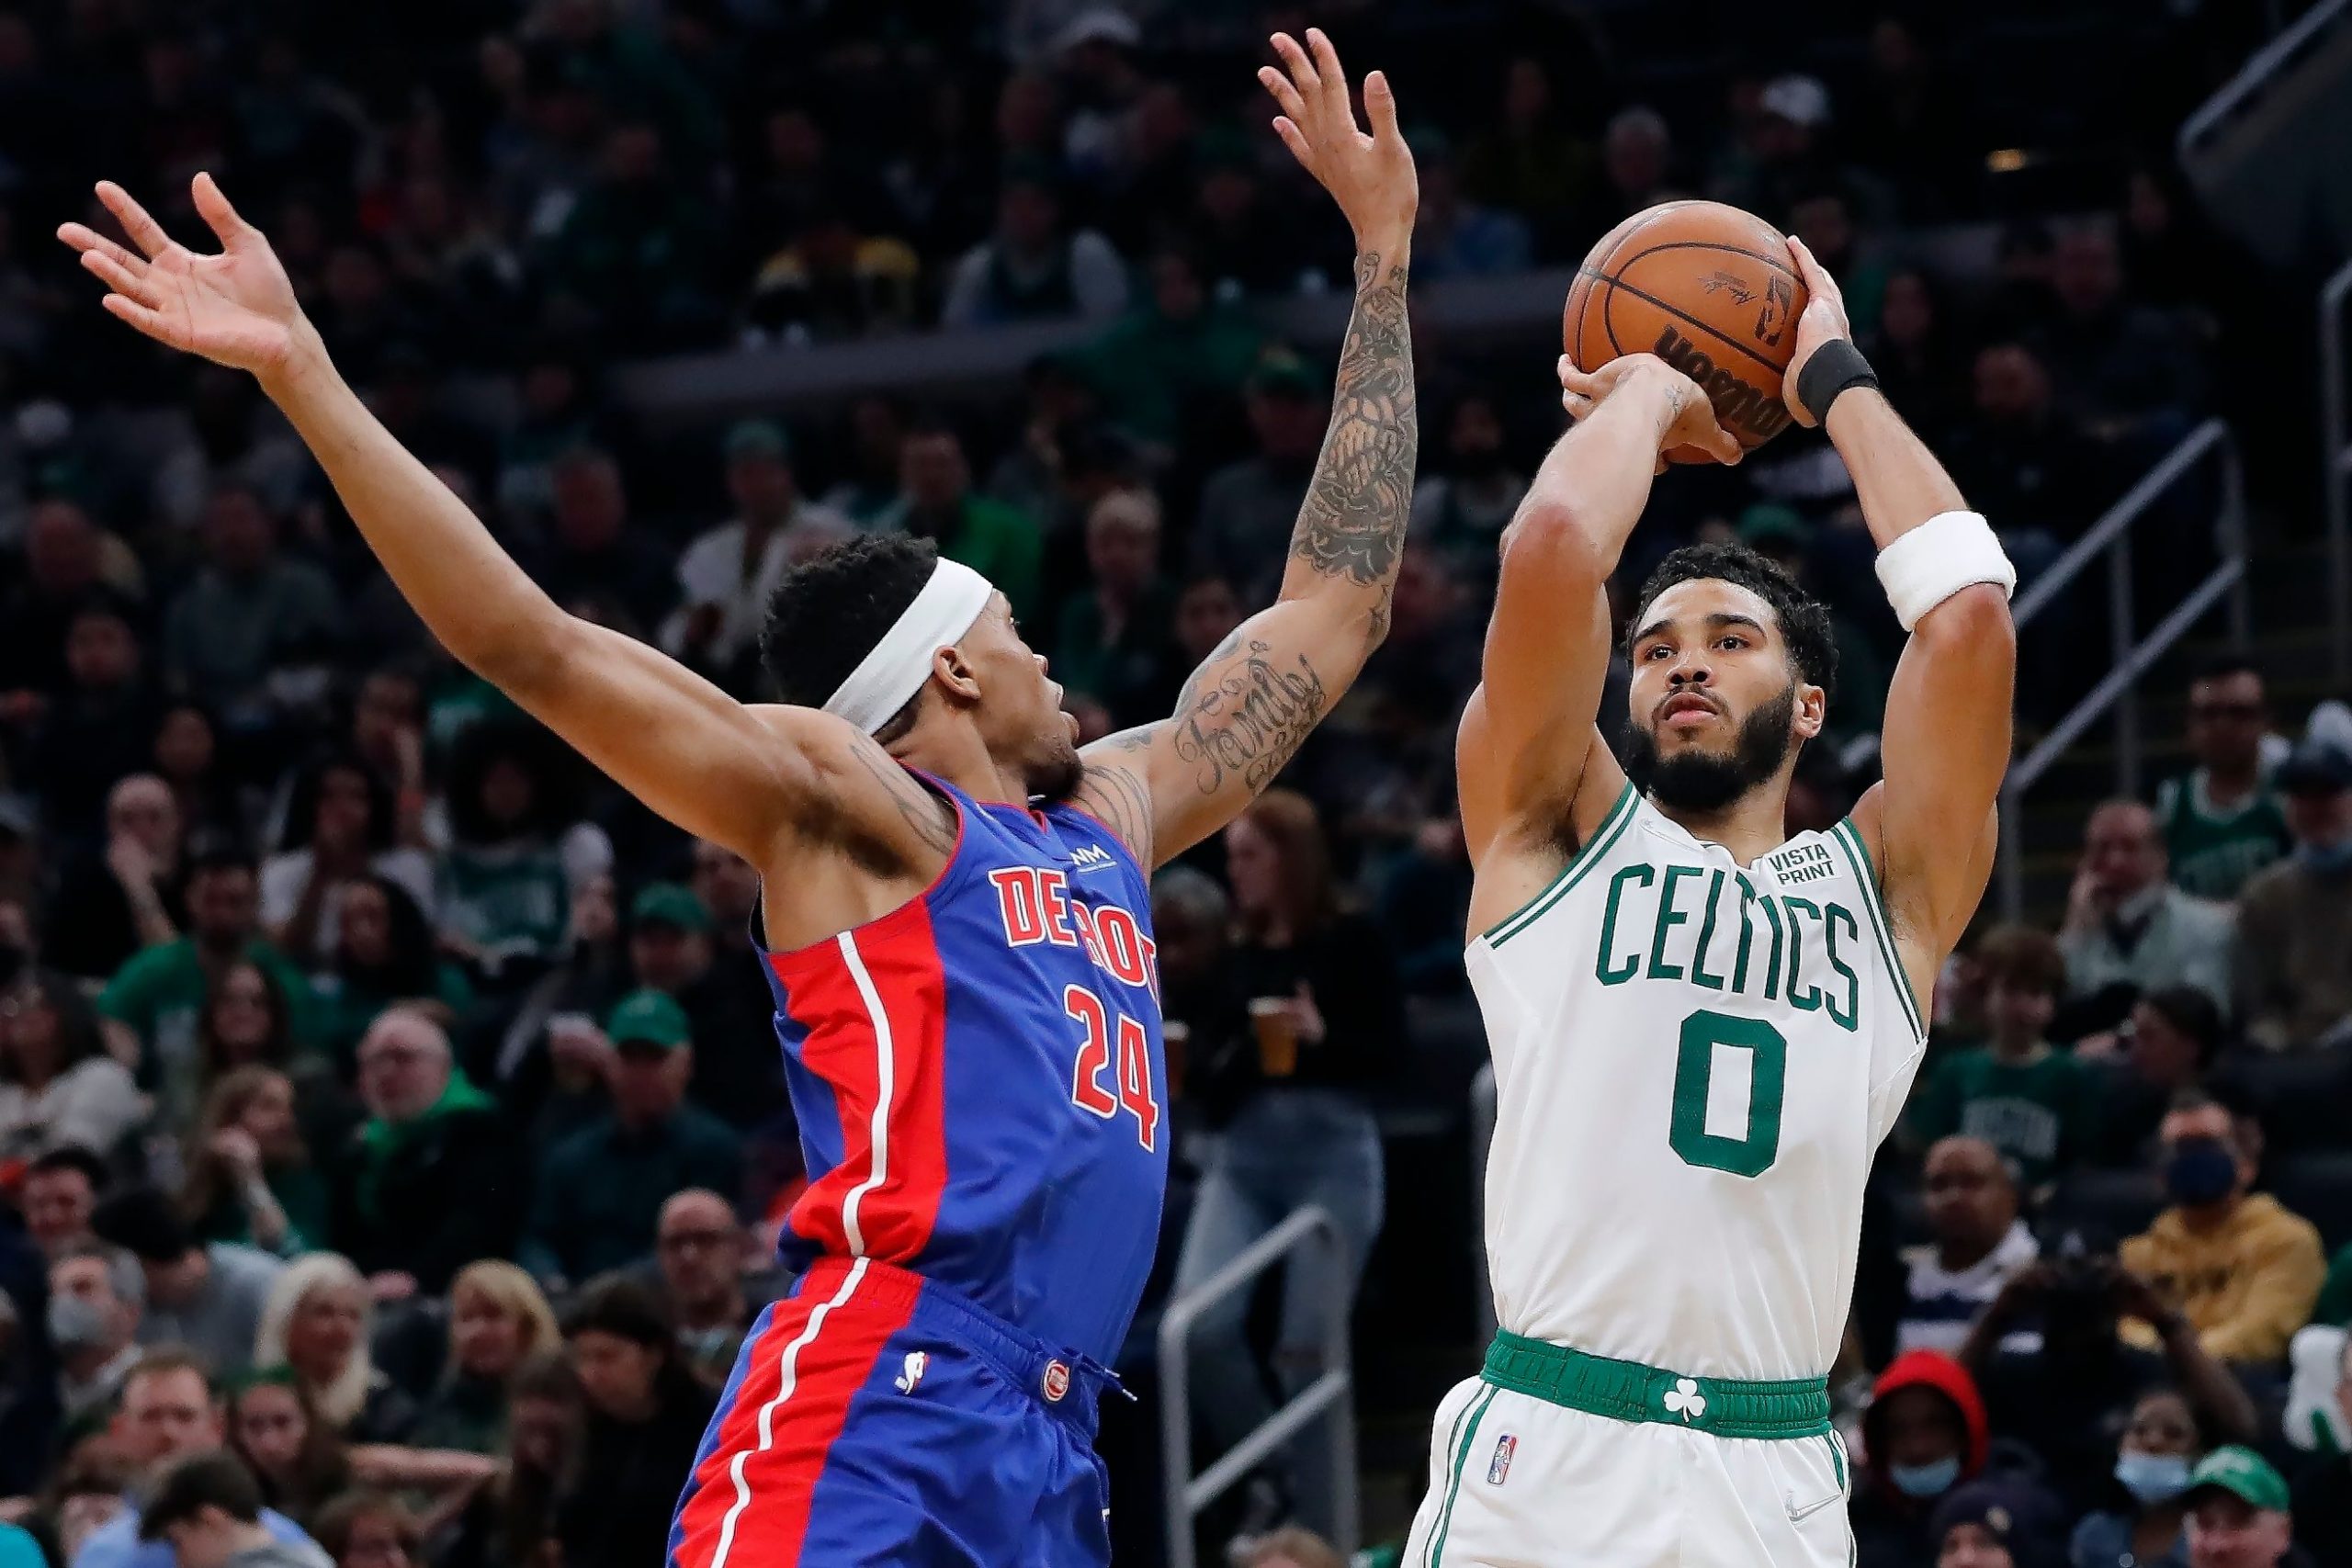 NBA: Jayson Tatum scores 31 points, Boston Celtics beat Detroit Pistons 114-103